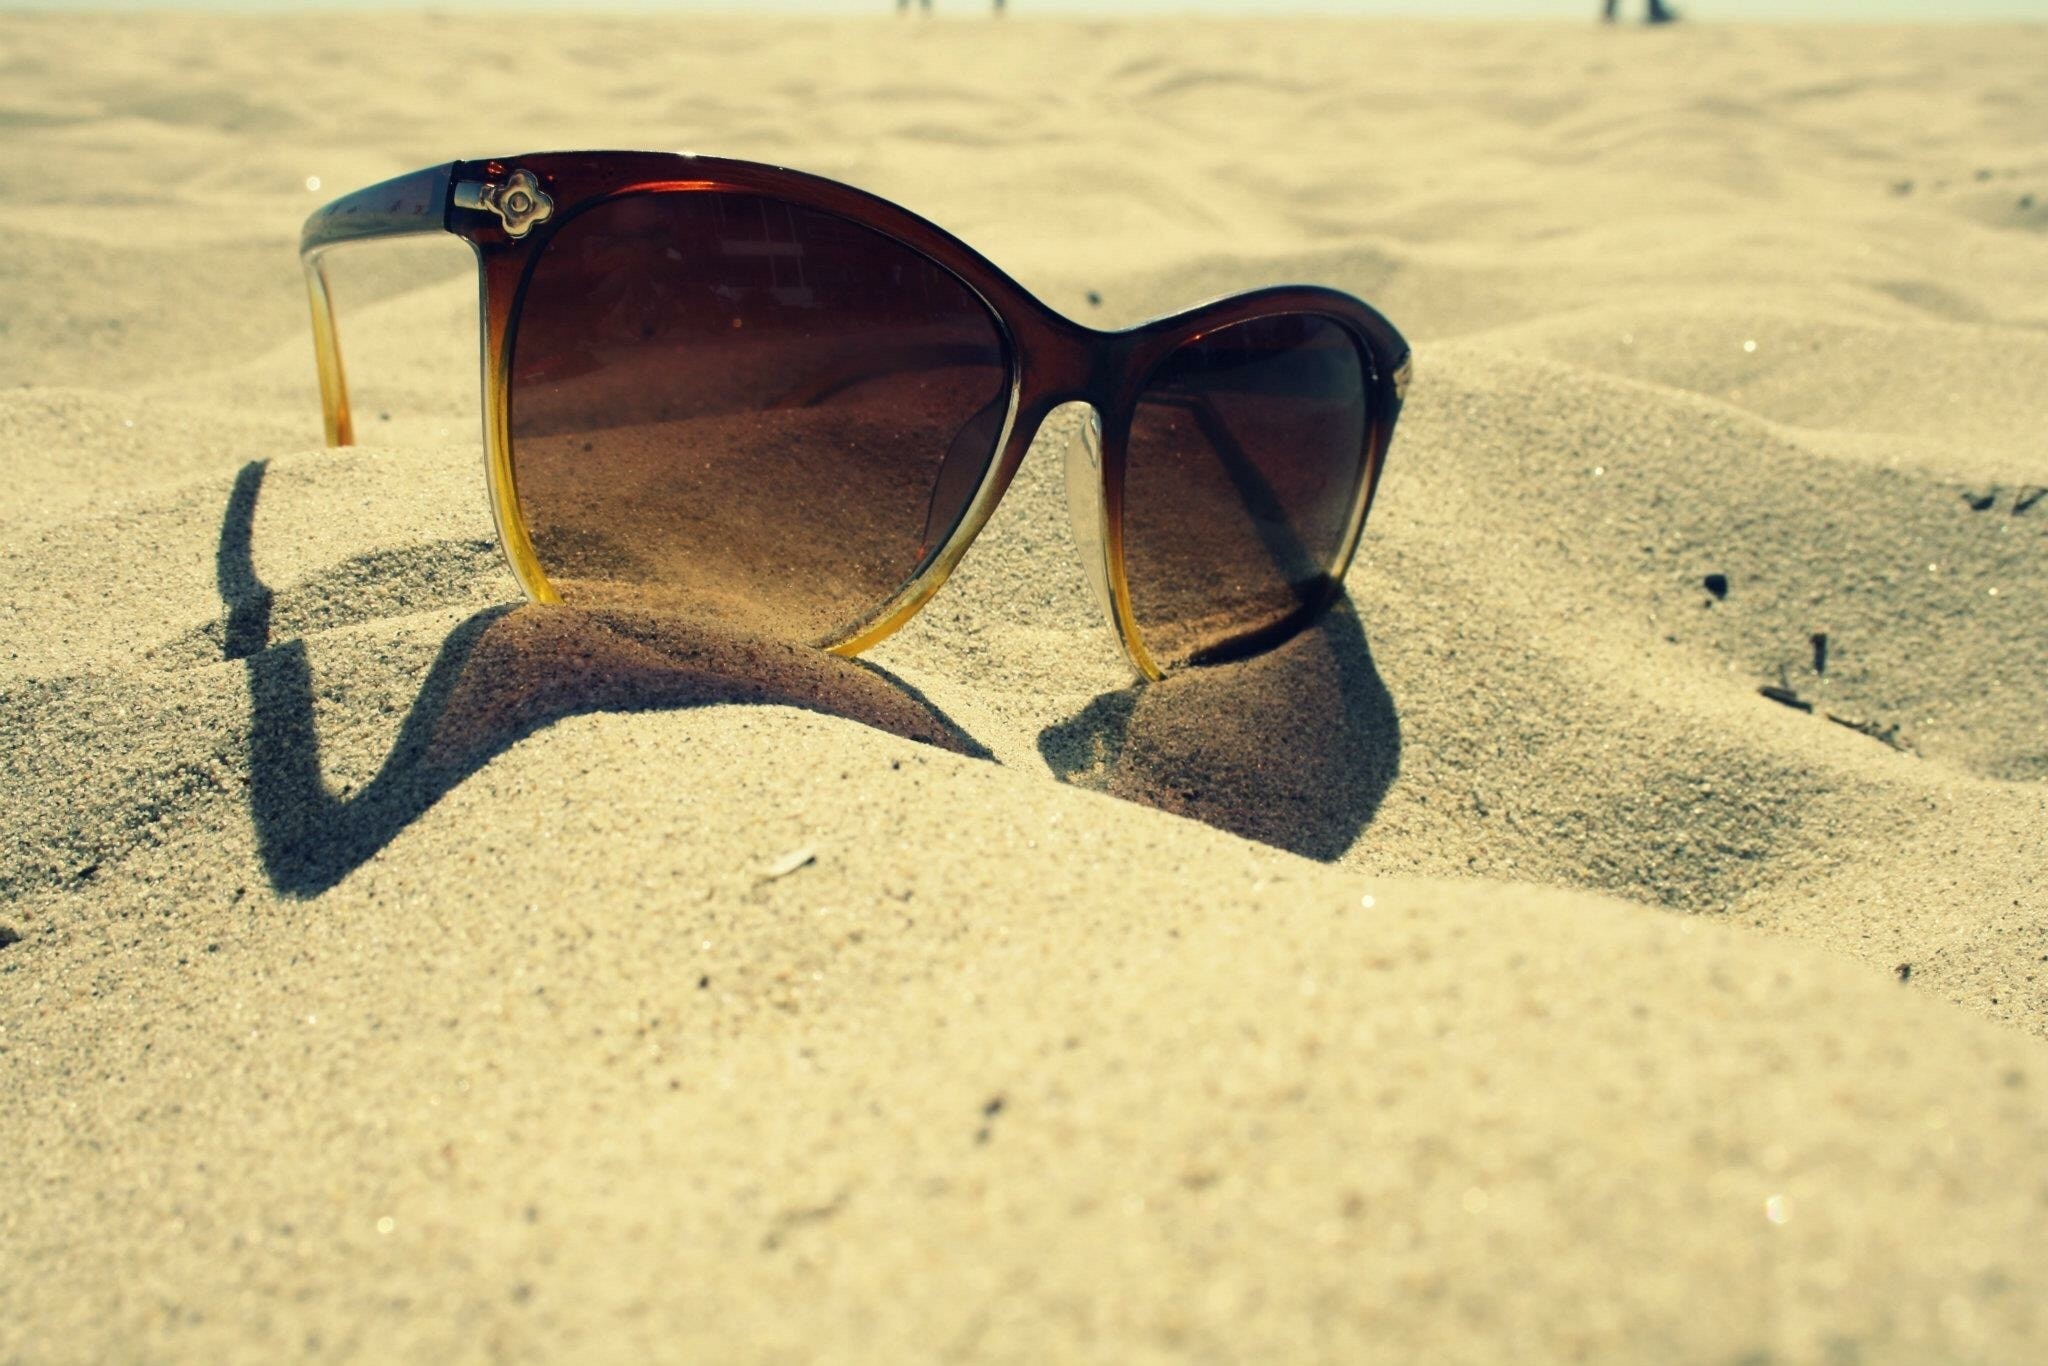 Sea, America, Beach, Sunglasses, Malibu, sunglasses, eyeglasses